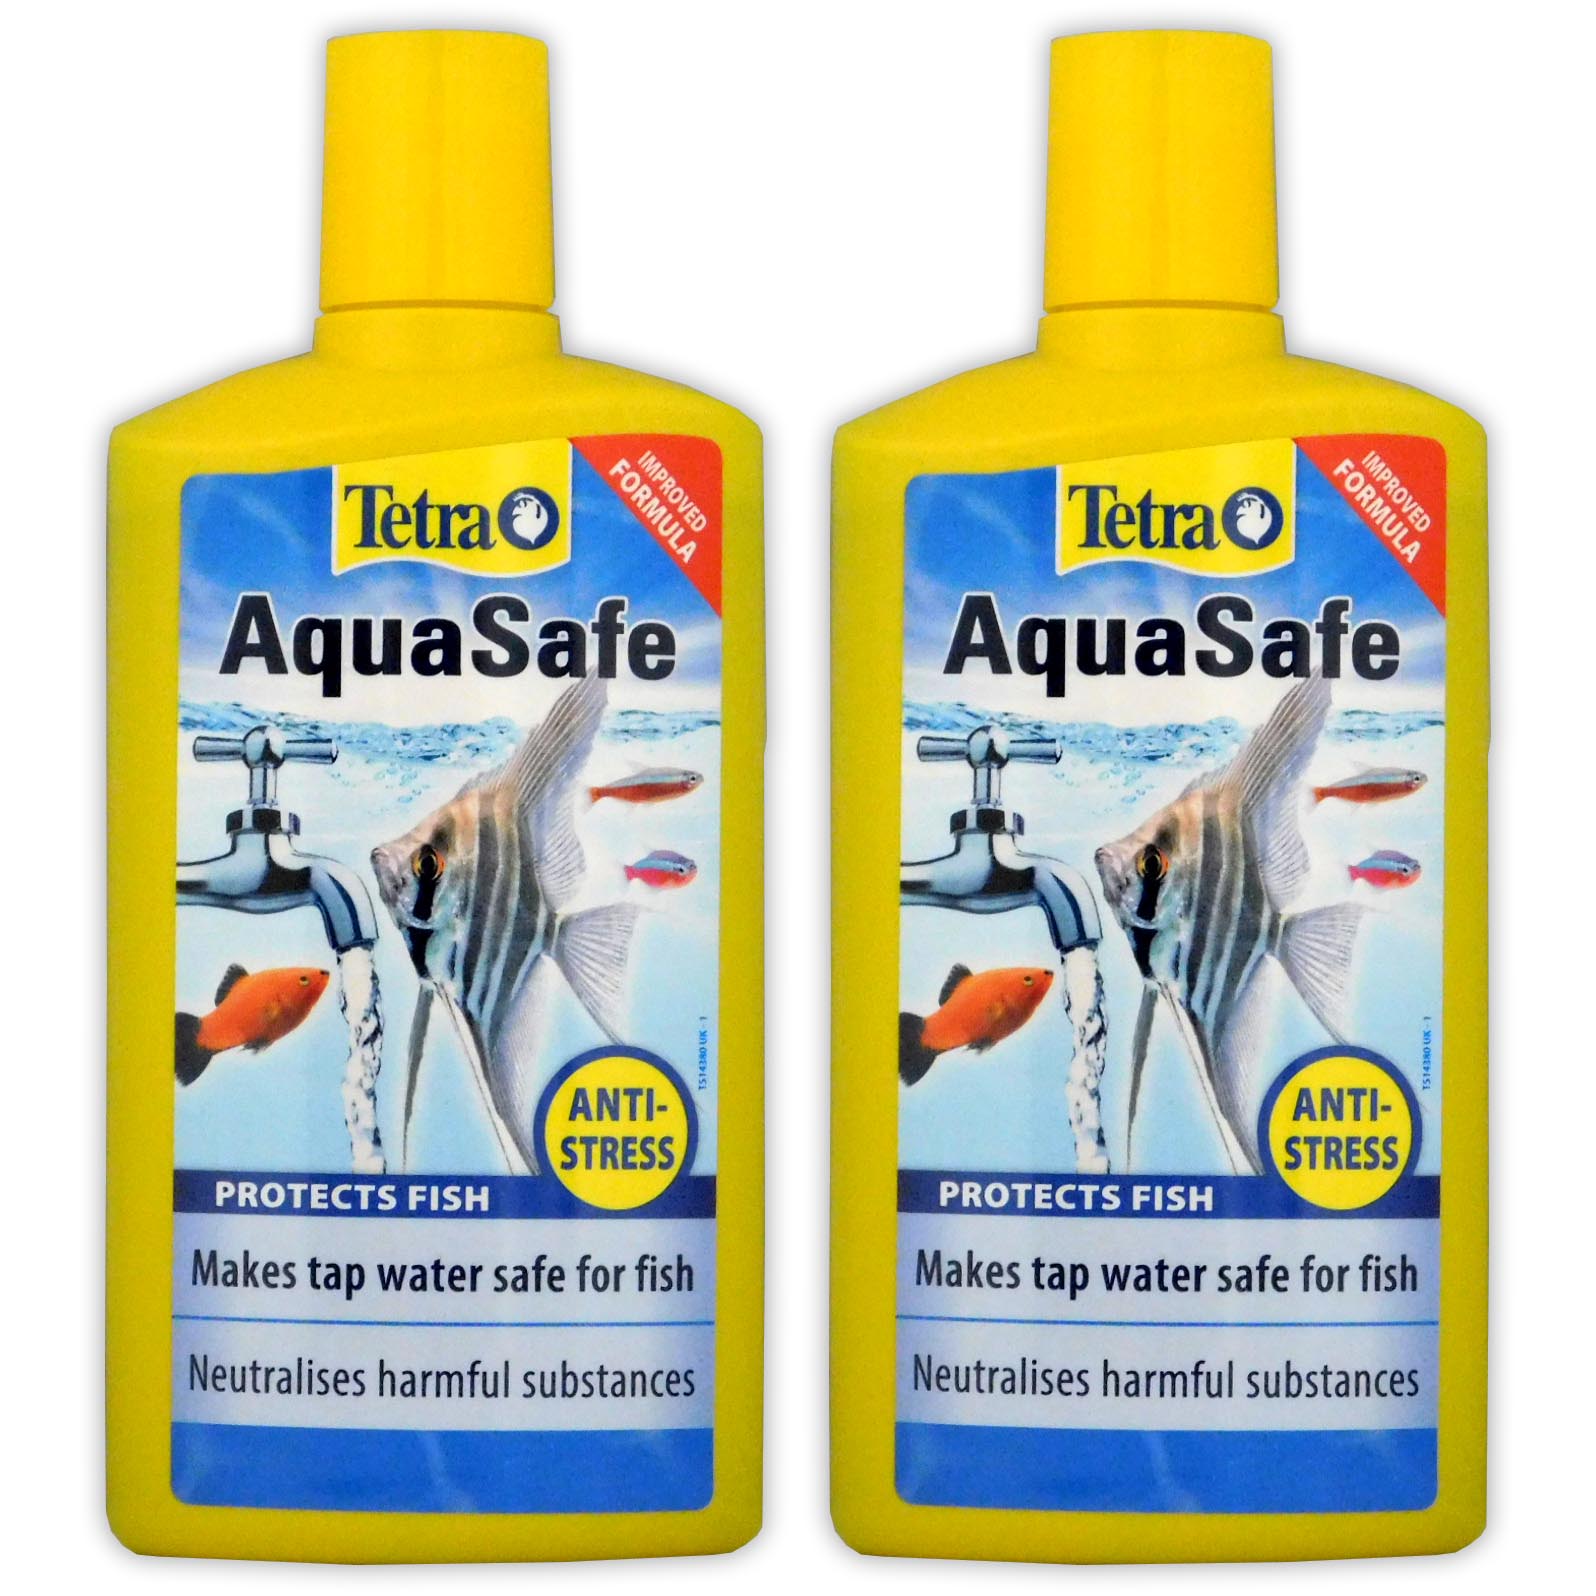 Tetra Aqua Safe 500ml + Tetra Crystal Water 250ml